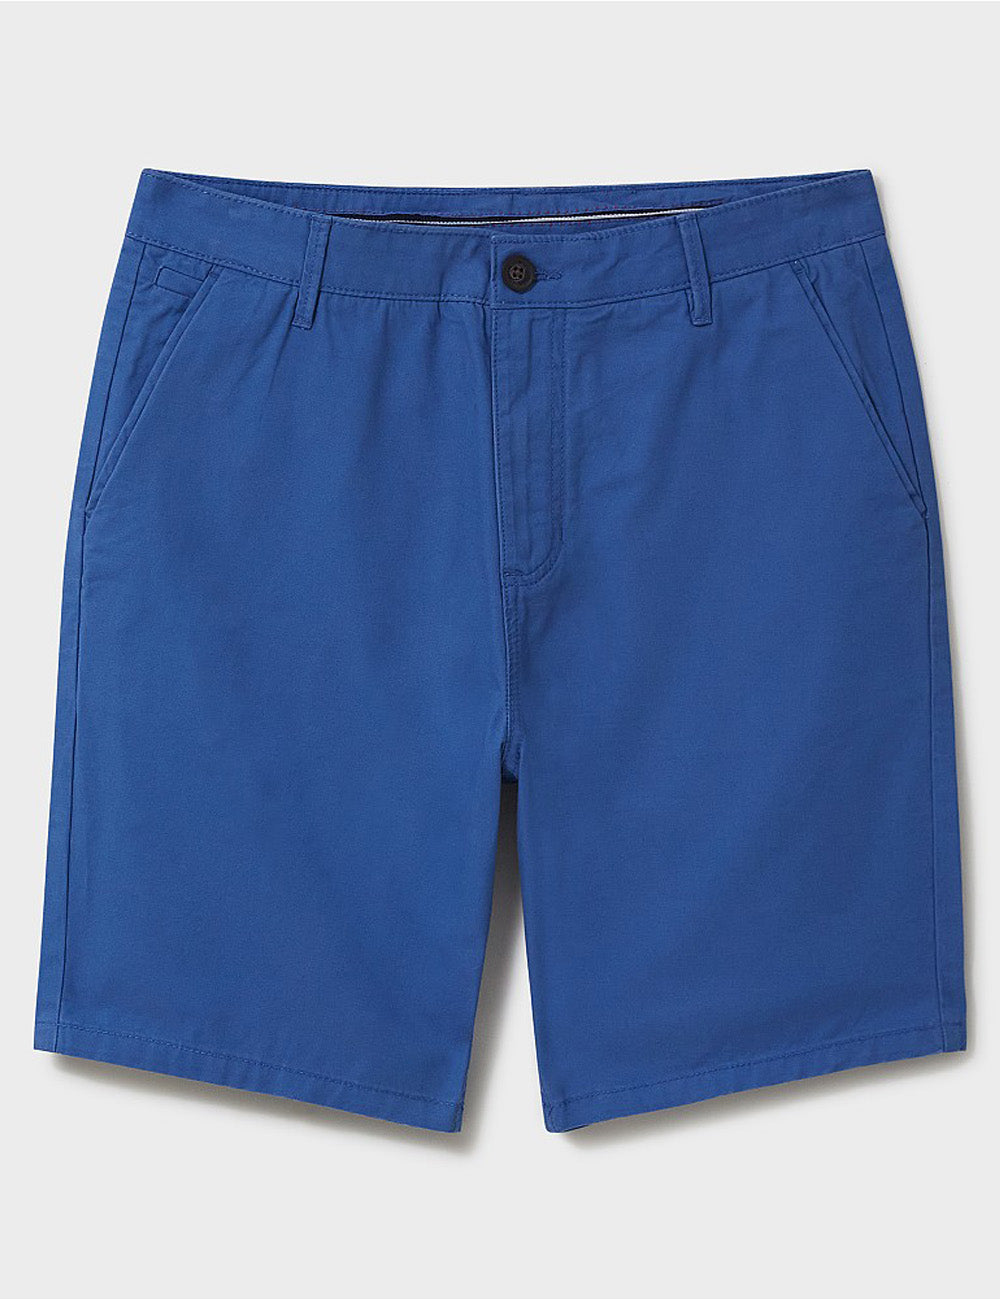 Crew Clothing's Bermuda Shorts in Dutch Blue on a grey background